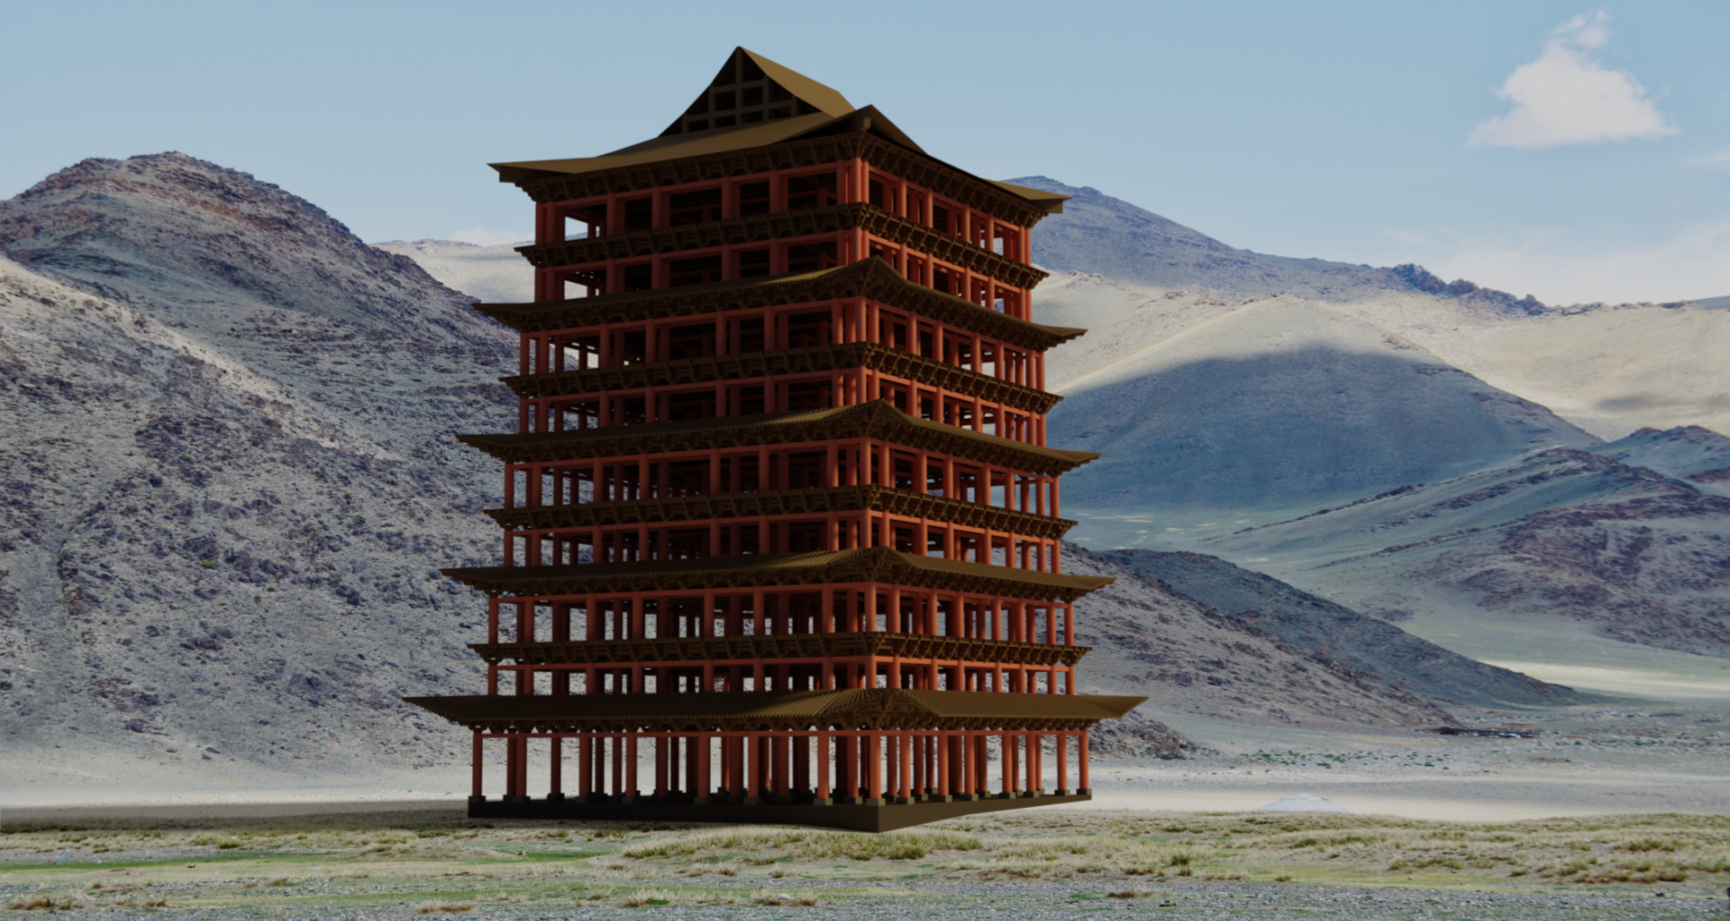 3D reconstruction representation of the "Great Hall" of Karakorum